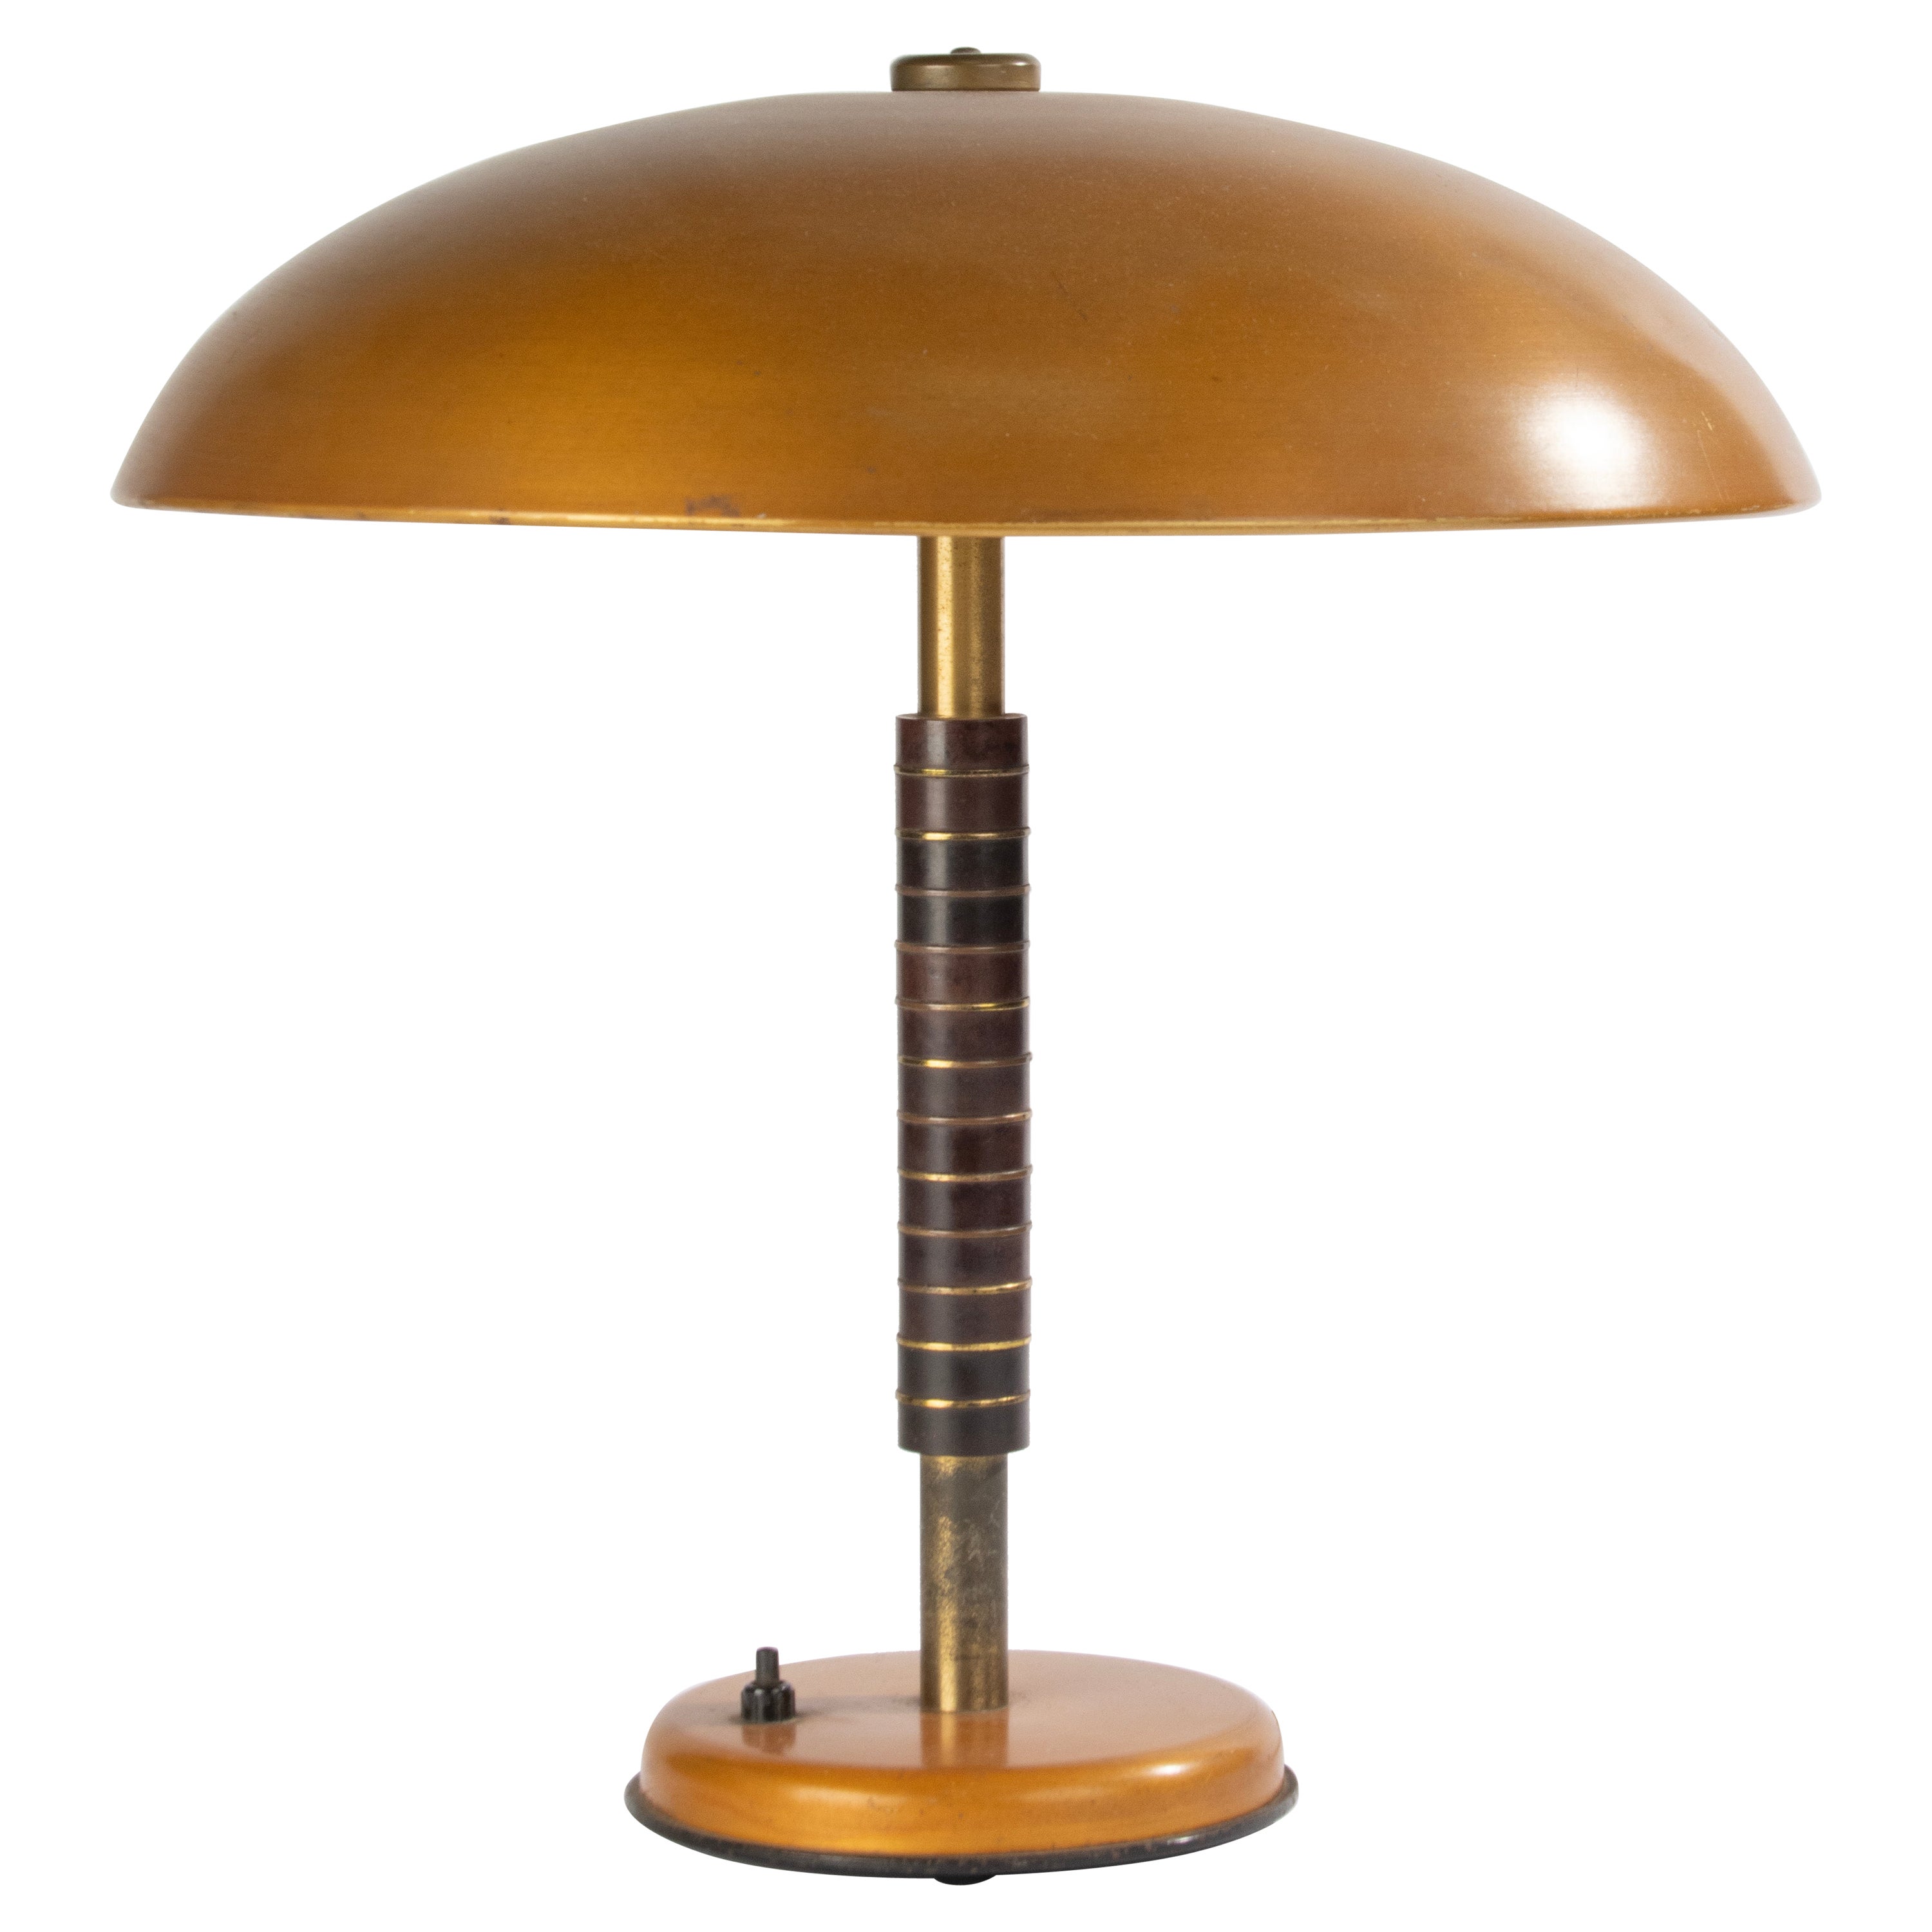 Vintage Bauhaus Table Lamp - 1940's - Bakelite and Metal  For Sale